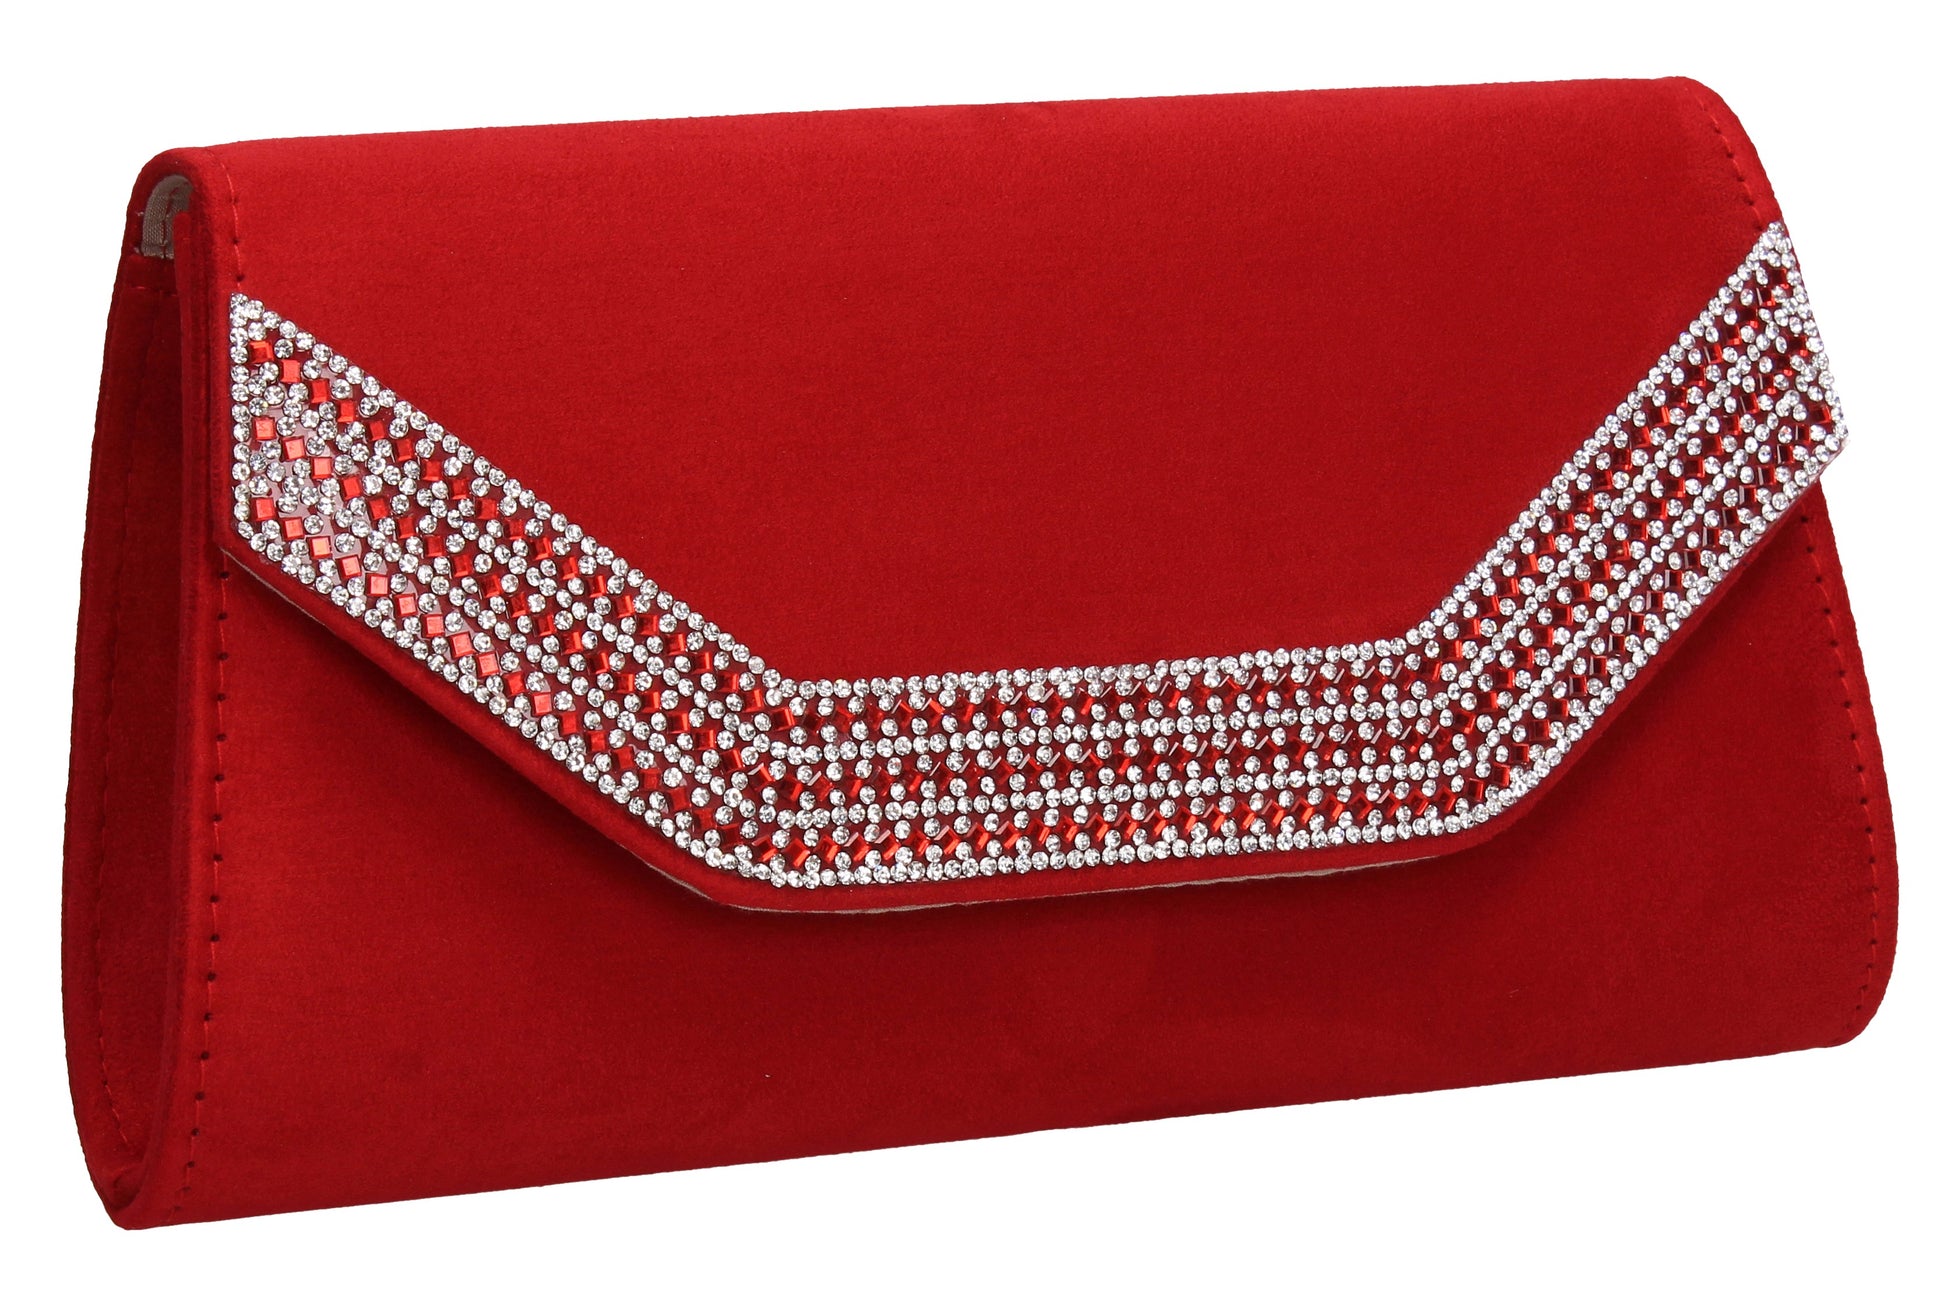 SWANKYSWANS Harper Clutch Bag Red Cute Cheap Clutch Bag For Weddings School and Work